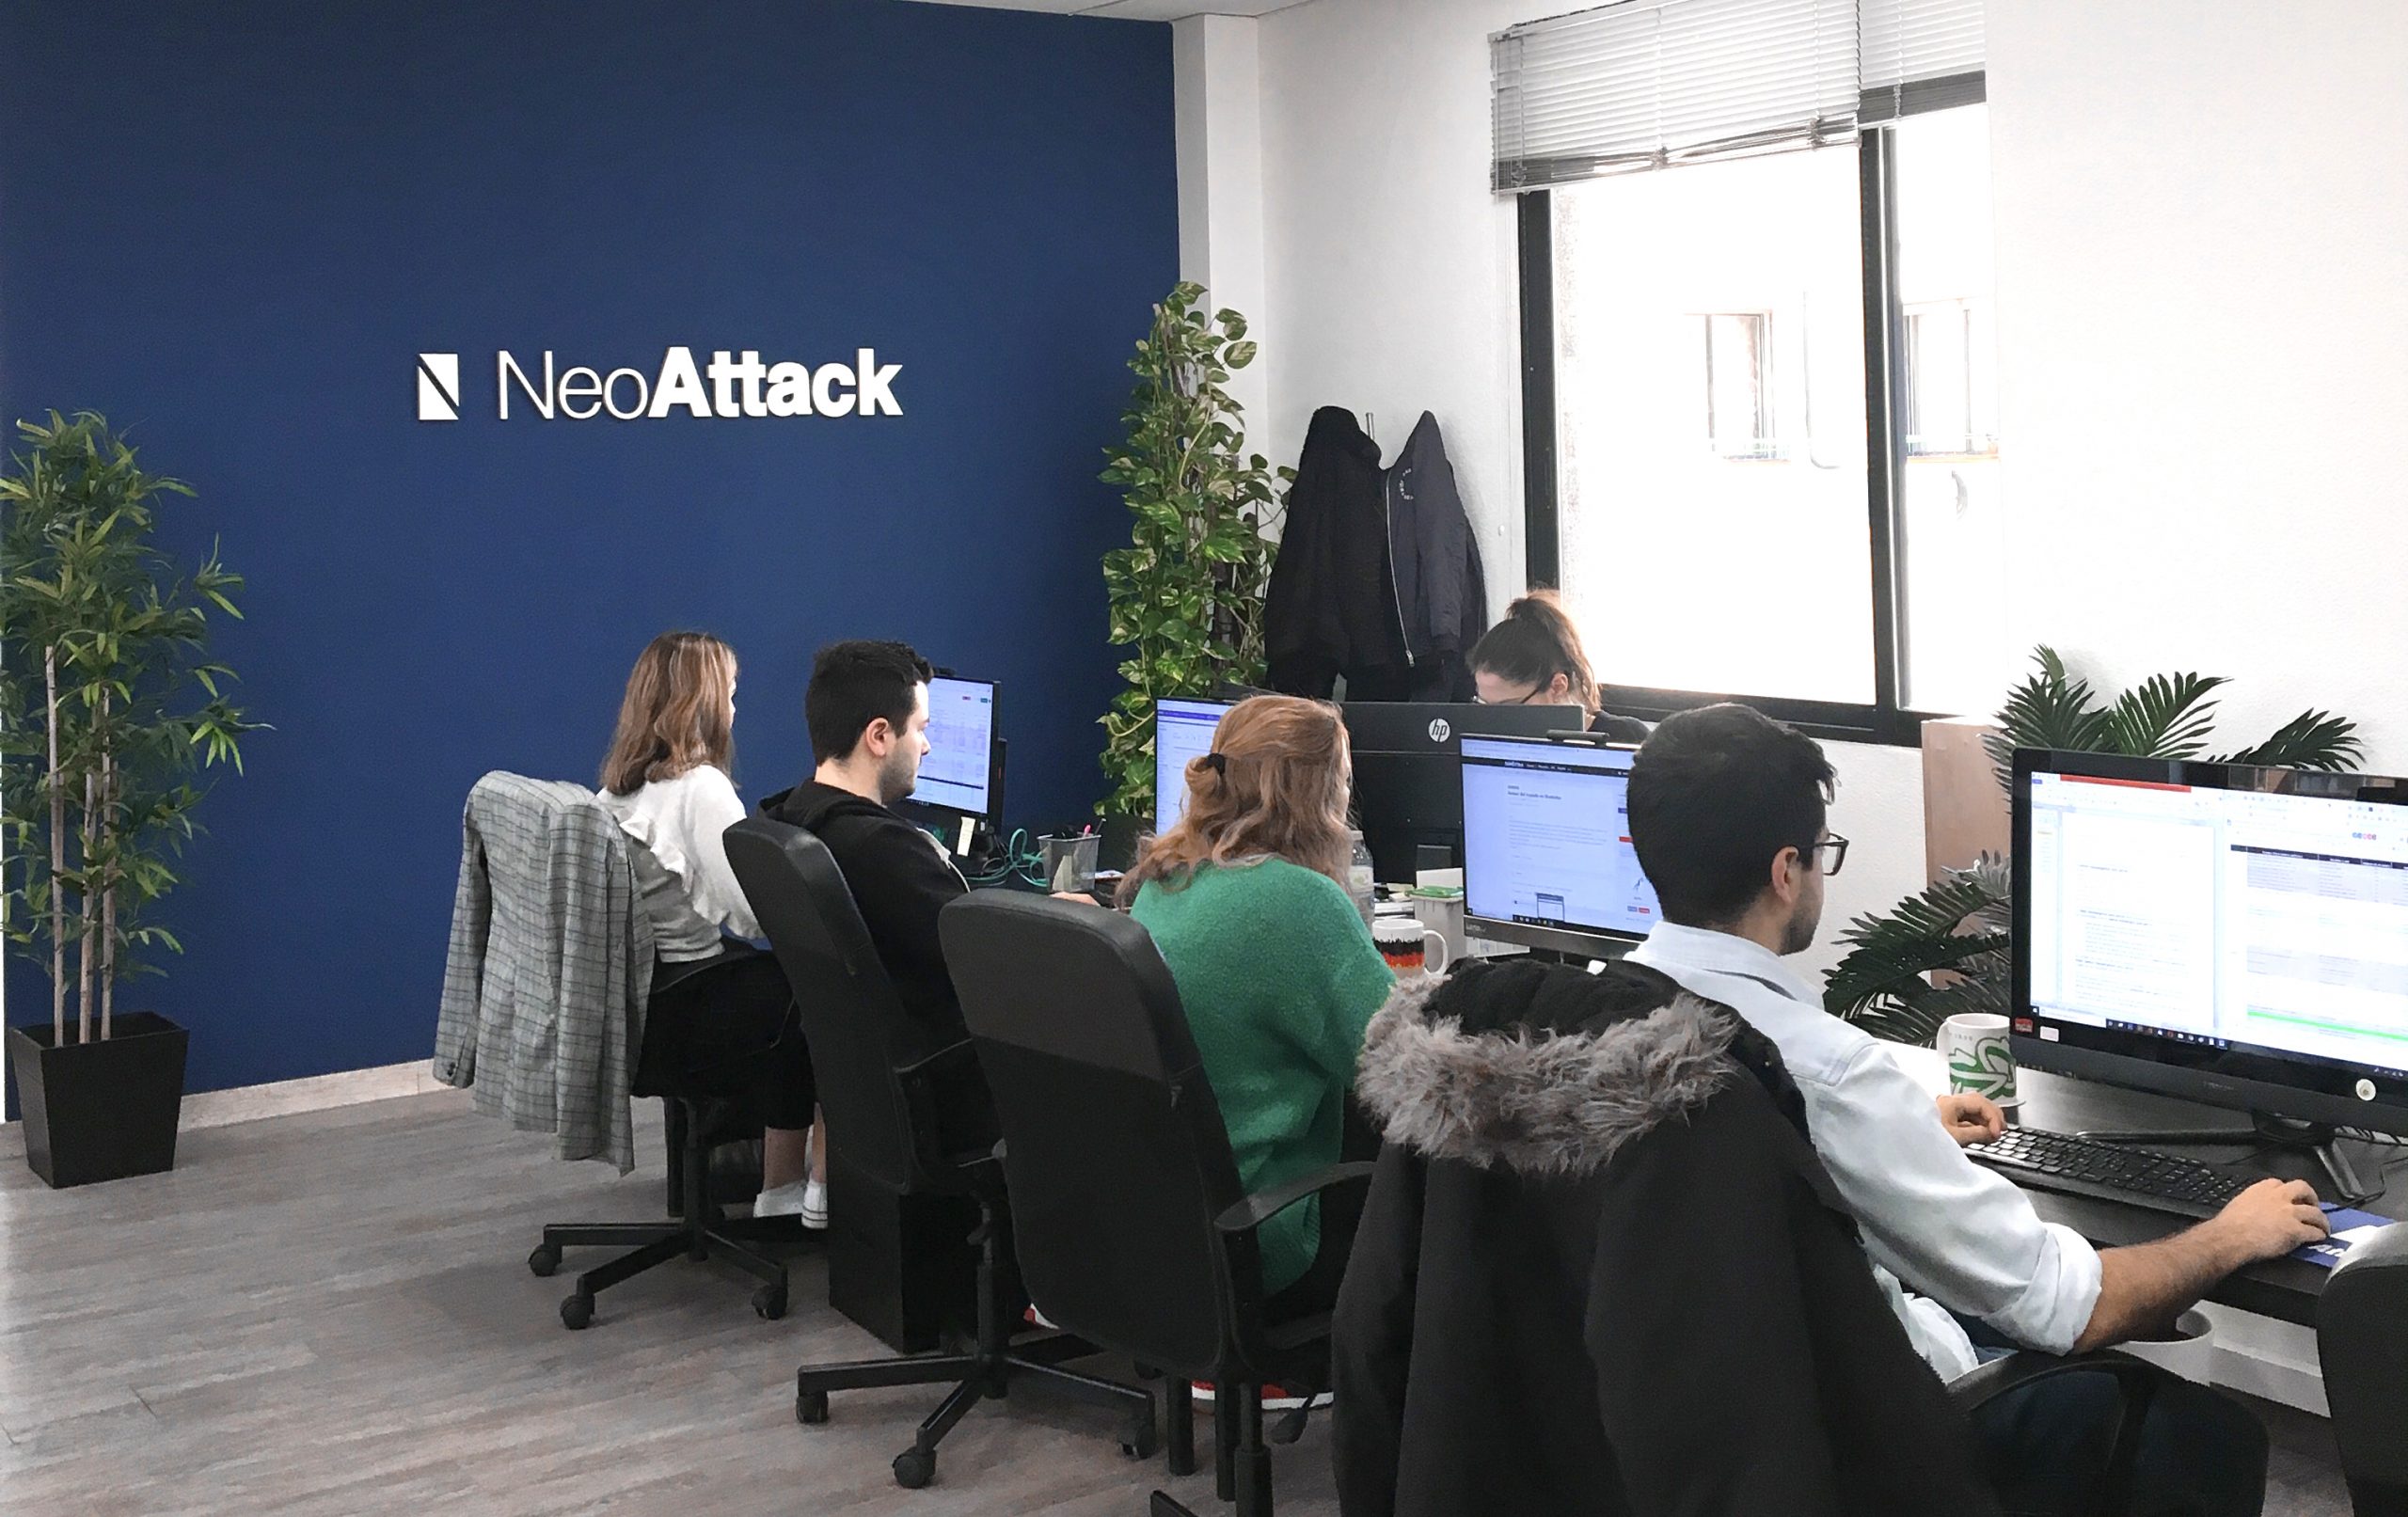 Oficinas NeoAttack